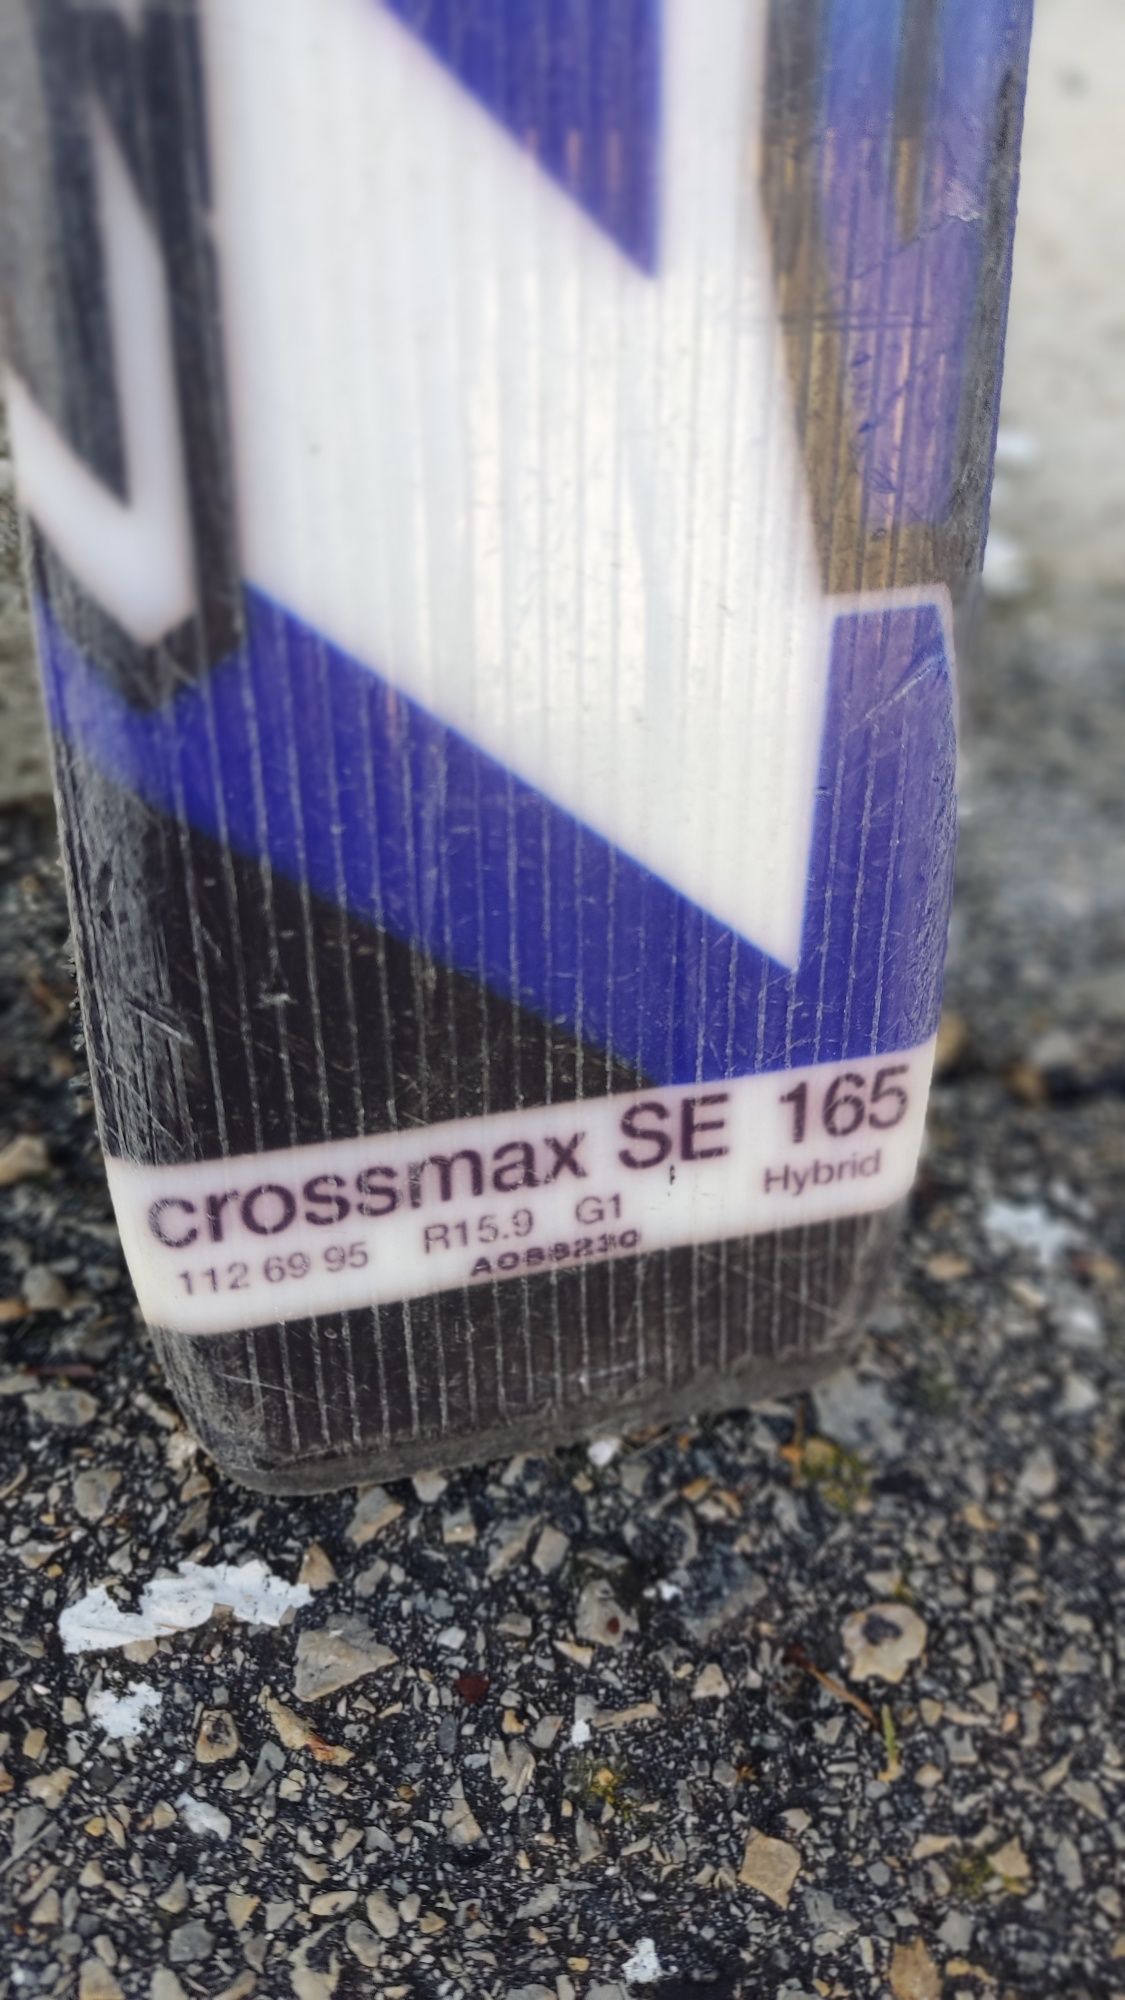 Ски Salomon Cross Max SE 165 cm 112/69/95 R15.9